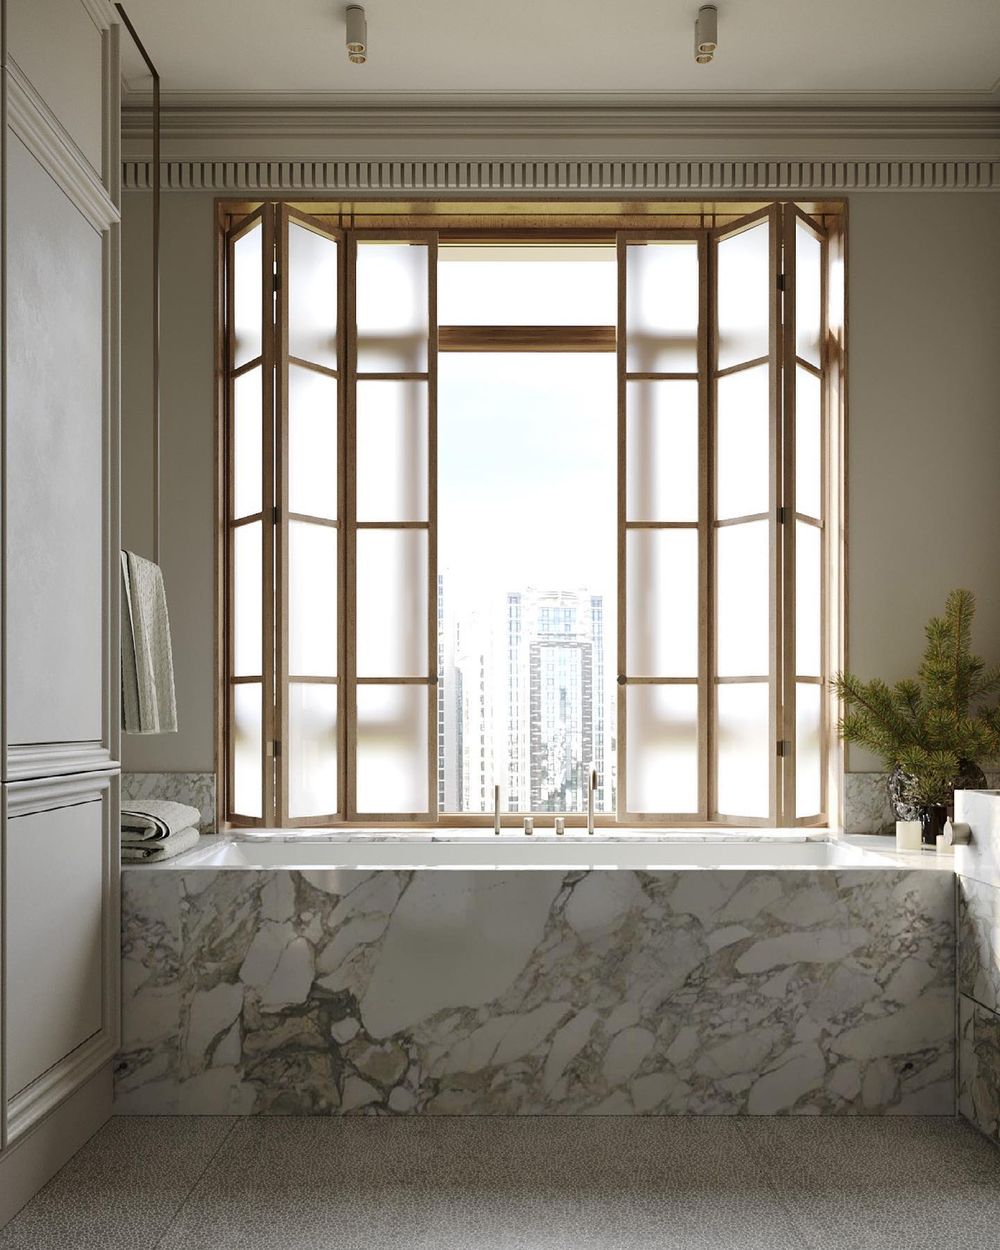 Marble bathtub brass bifold window @hdm2_architect